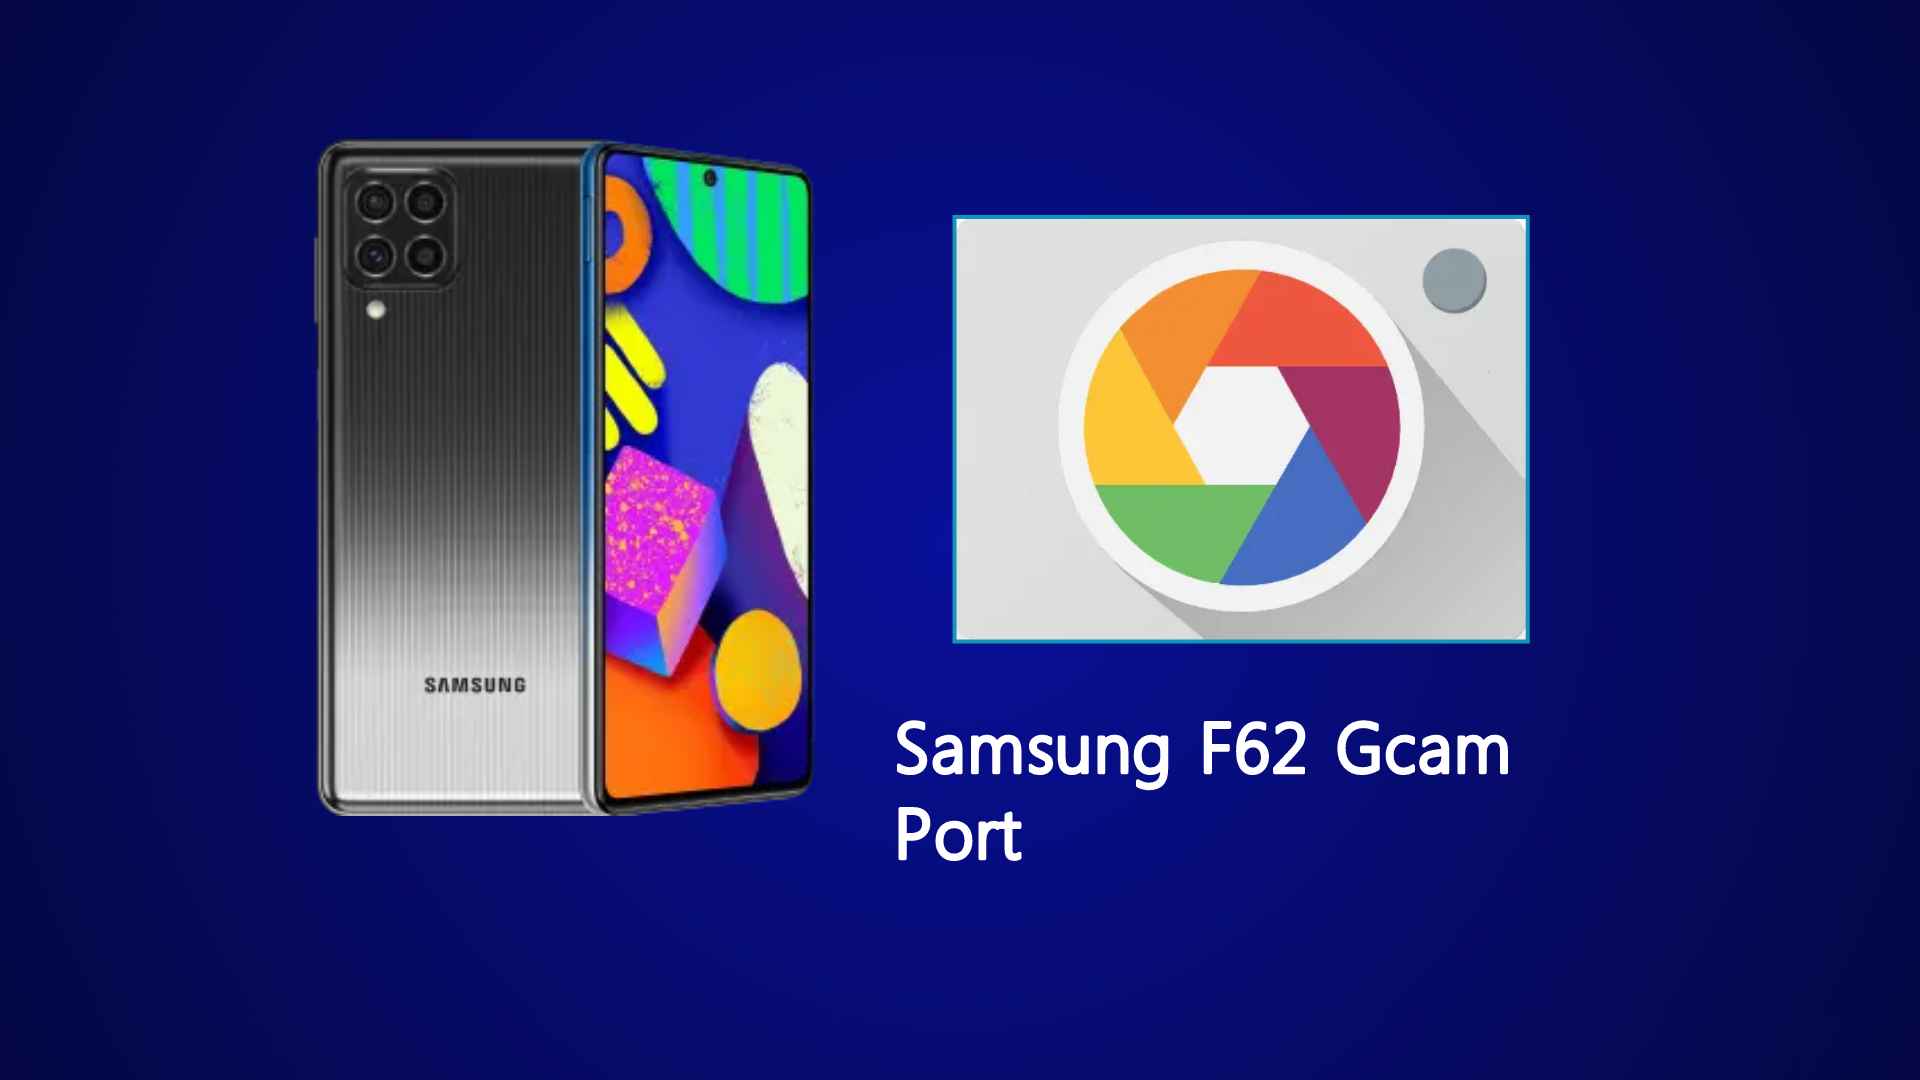 Samsung F62 Gcam Port